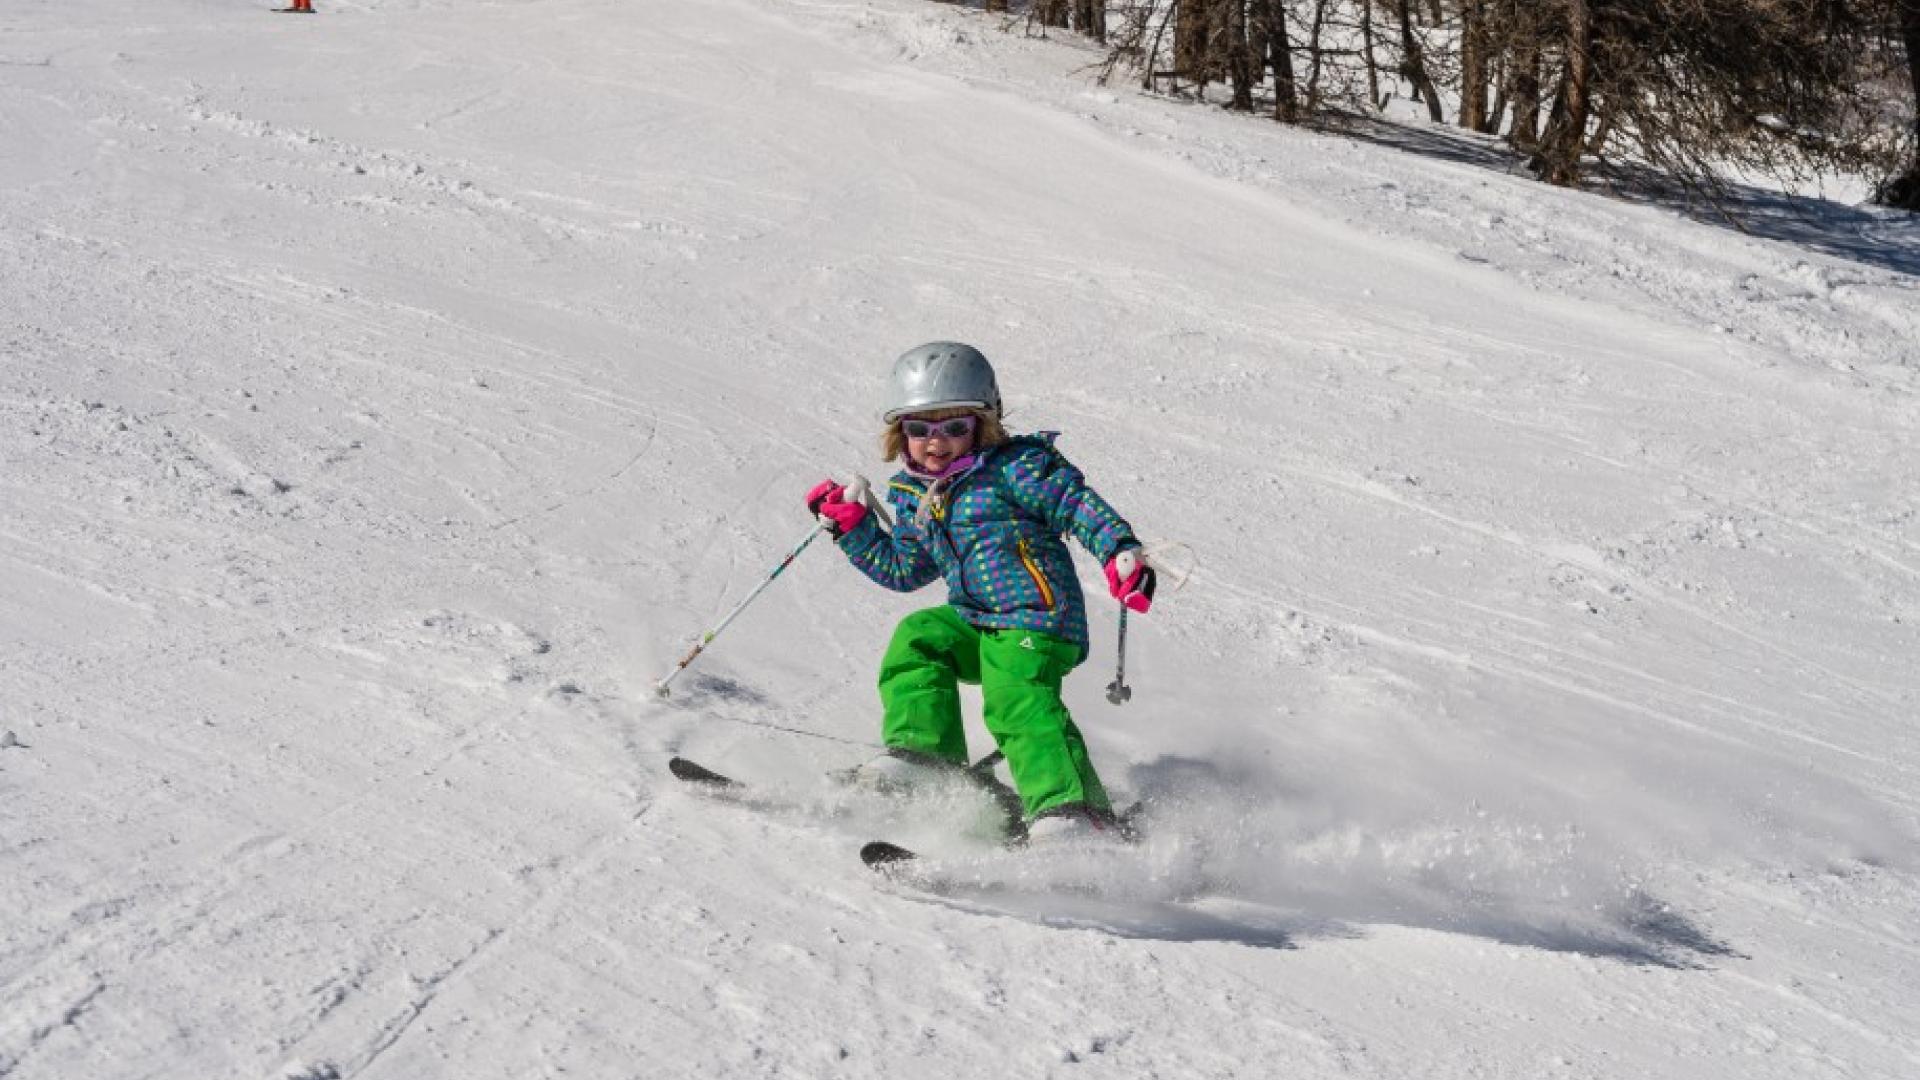 enfant ski aux karellis en savoie piste de ski bleue